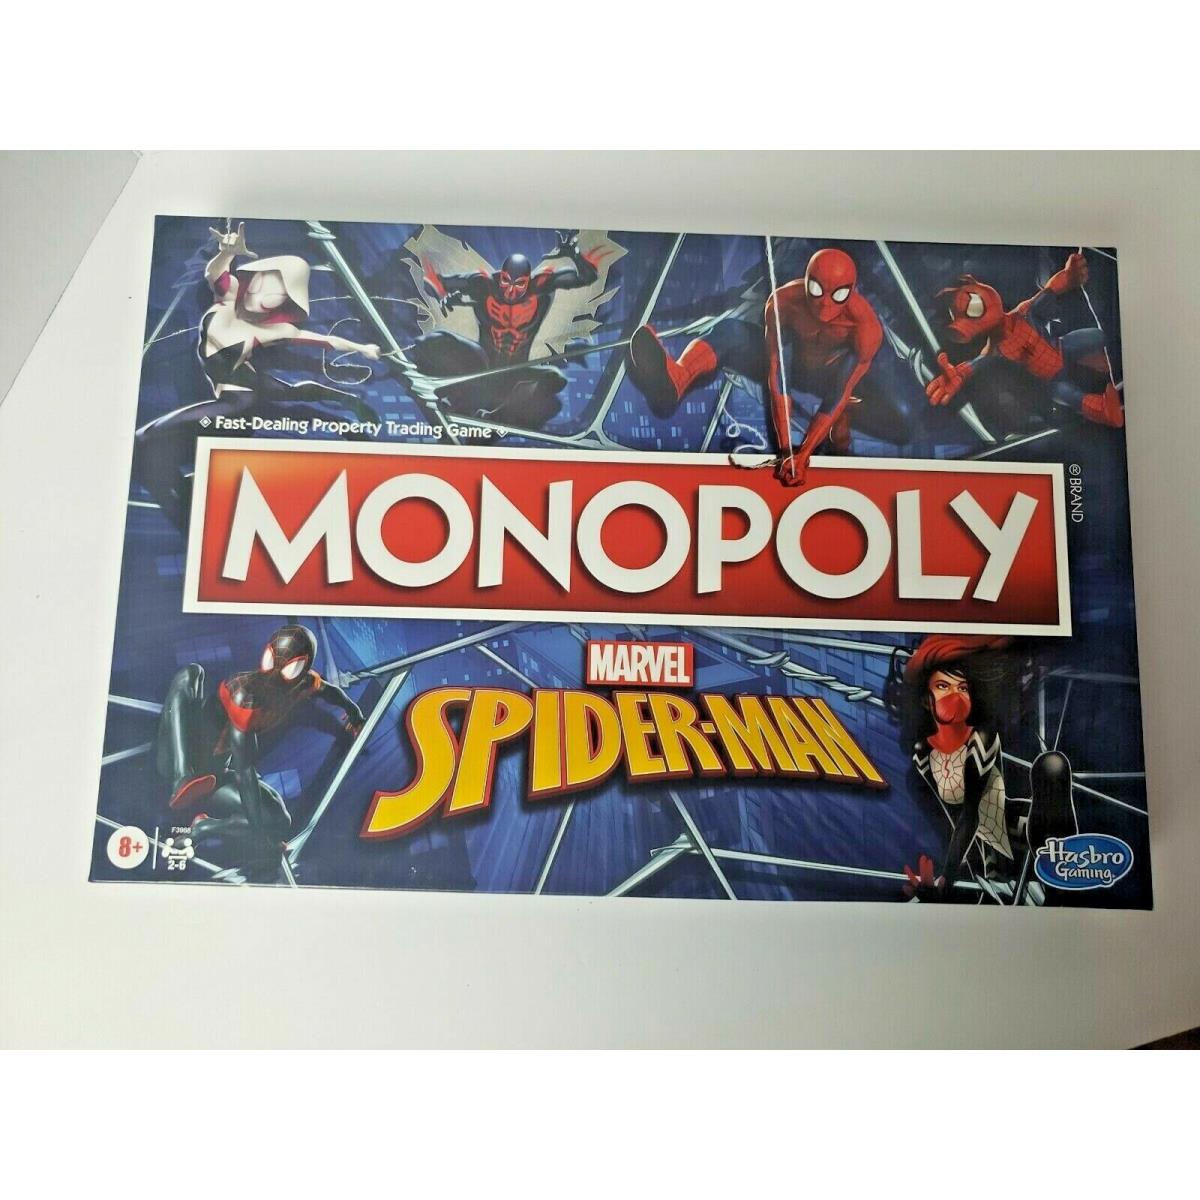 Monopoly: Marvel Spider-man